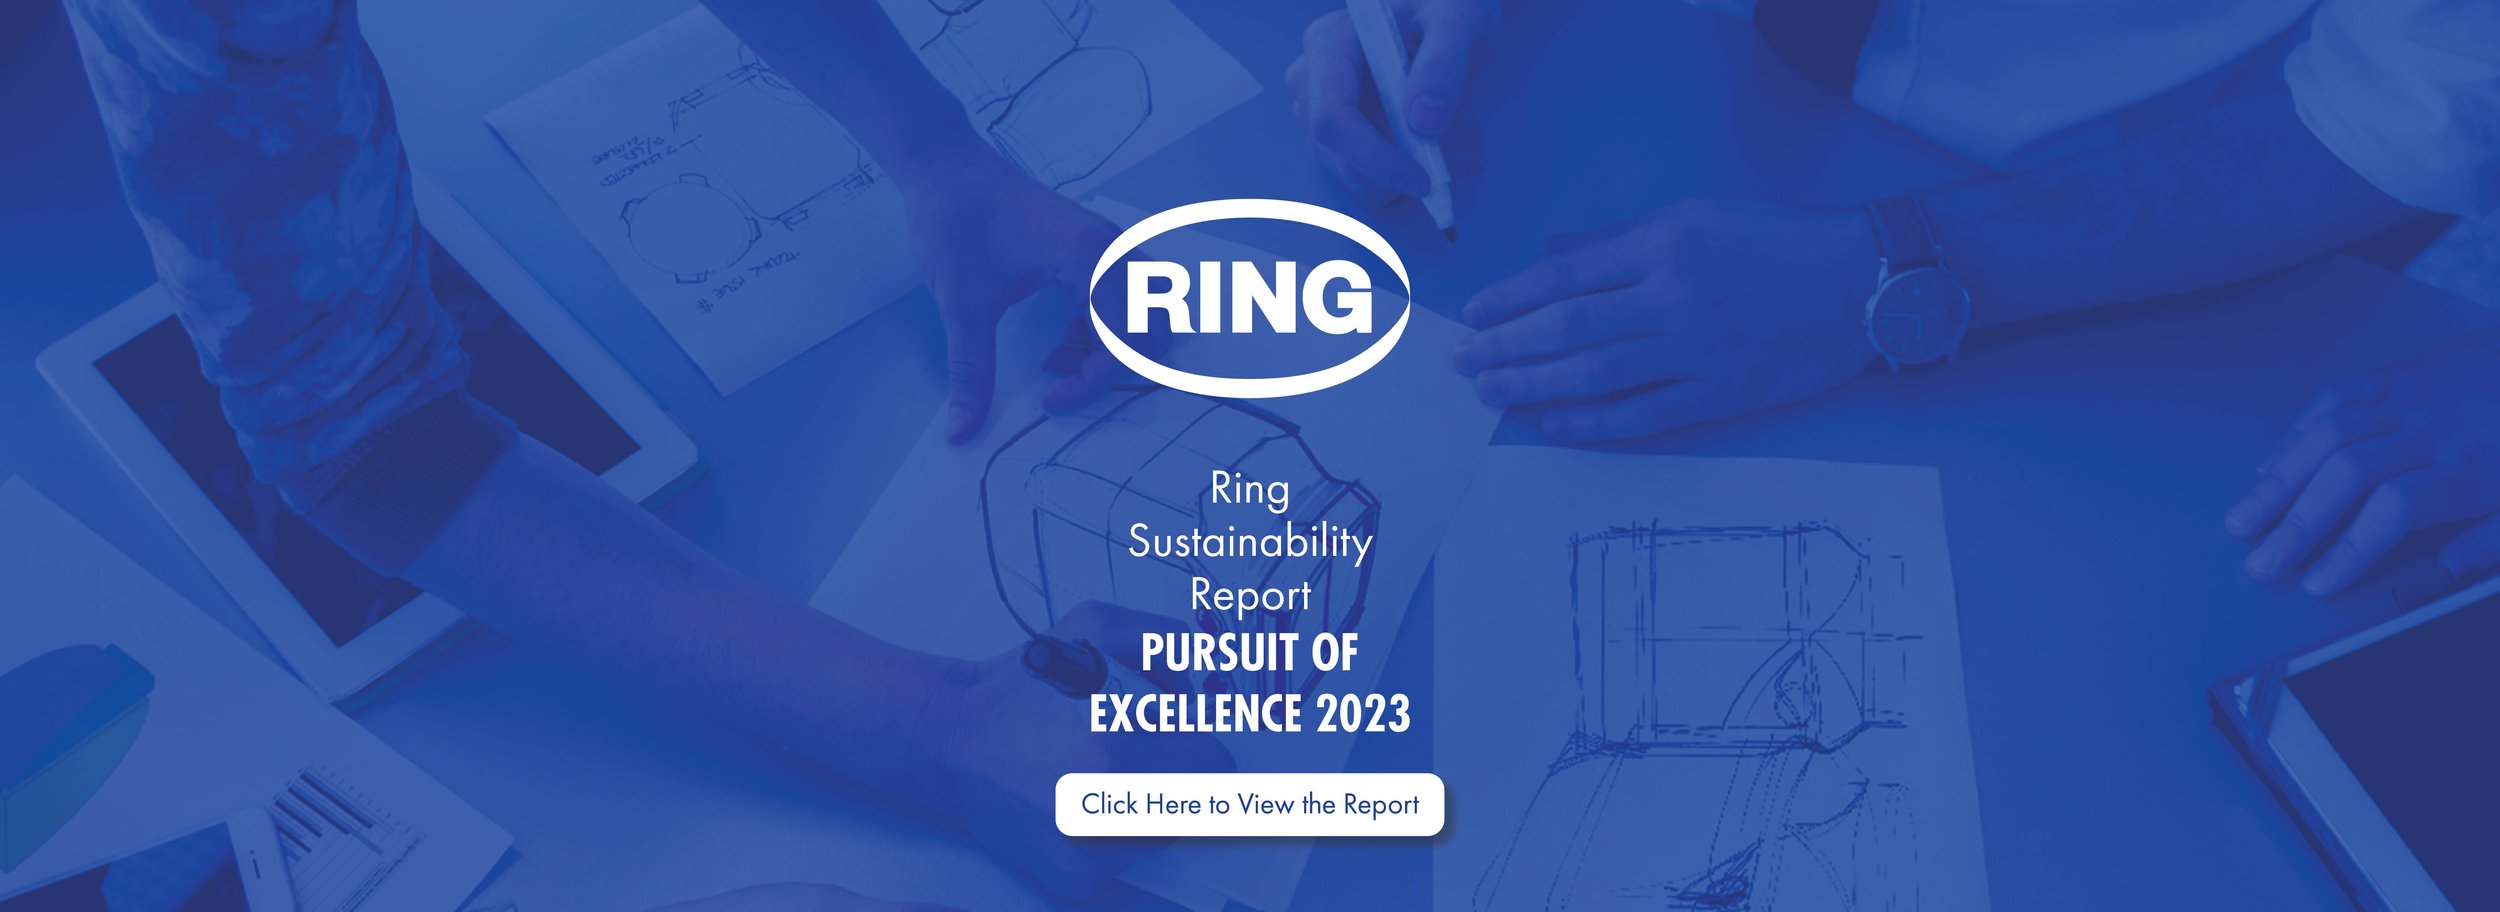 Ring-0454 2024 Sustainability - Homepage Banner v1.jpg